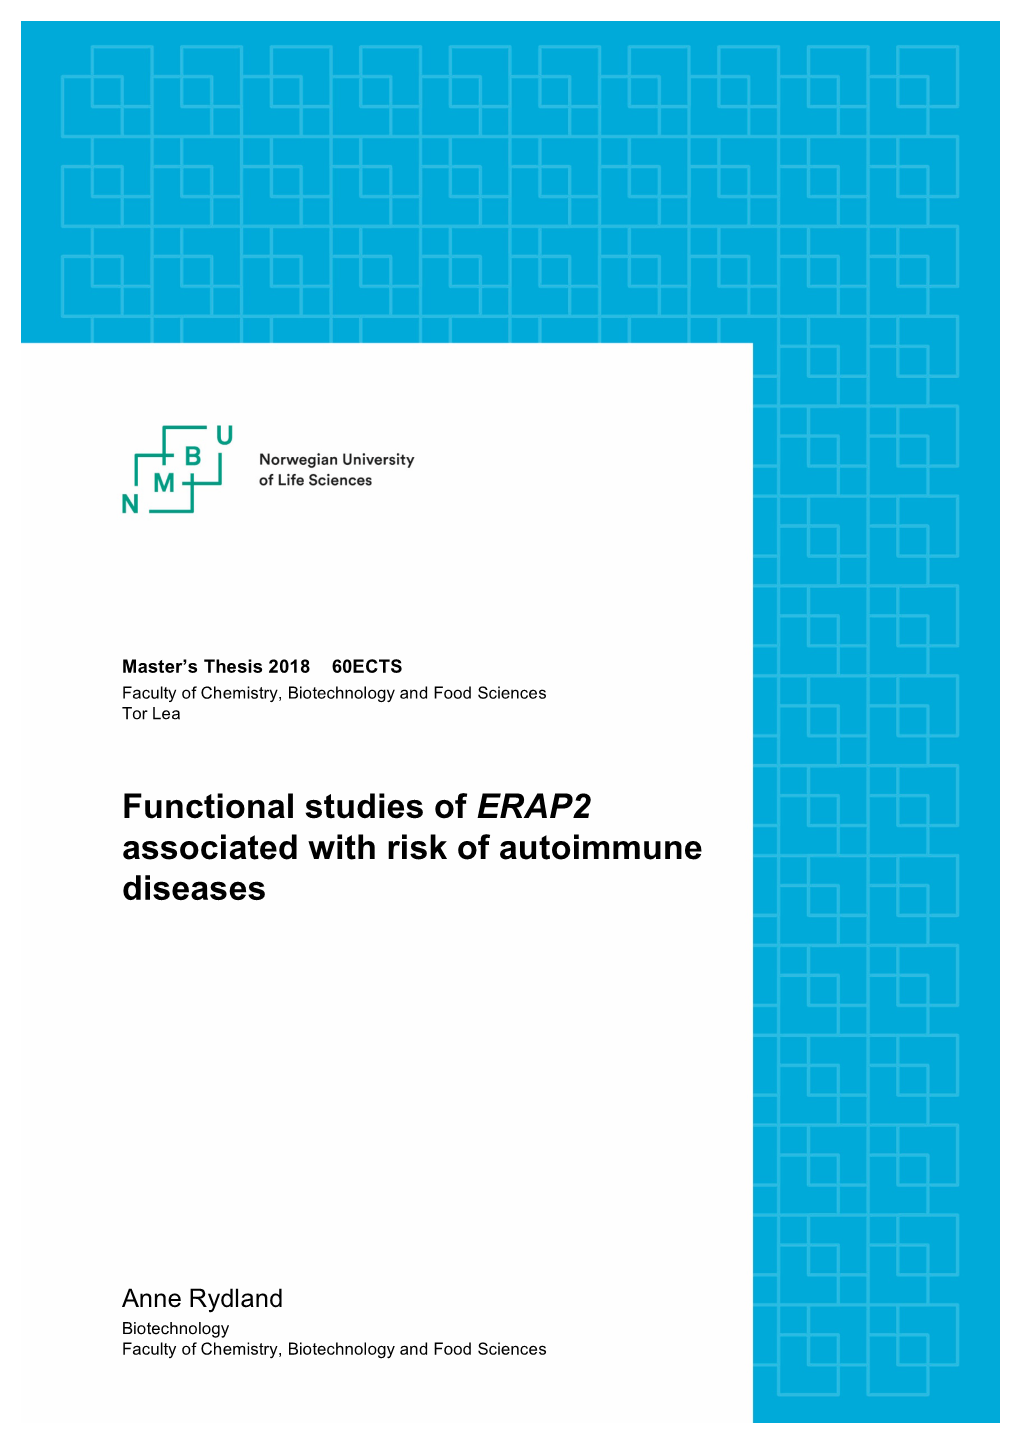 Functional Studies of ERAP2 Associated with Risk of Autoimmune Diseases